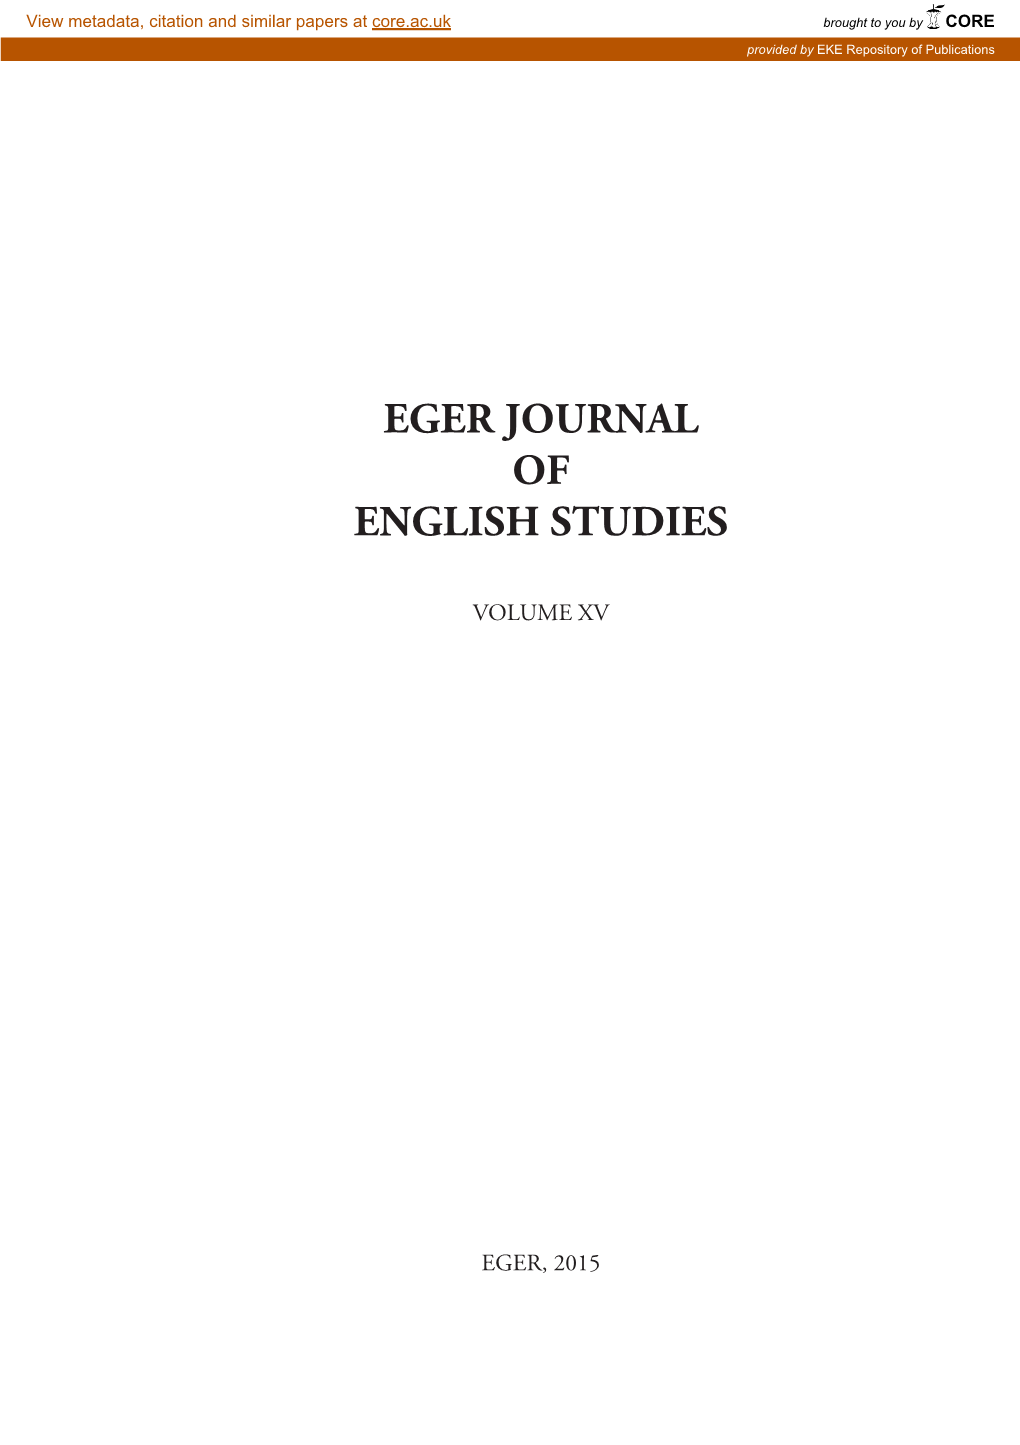 Eger Journal of English Studies